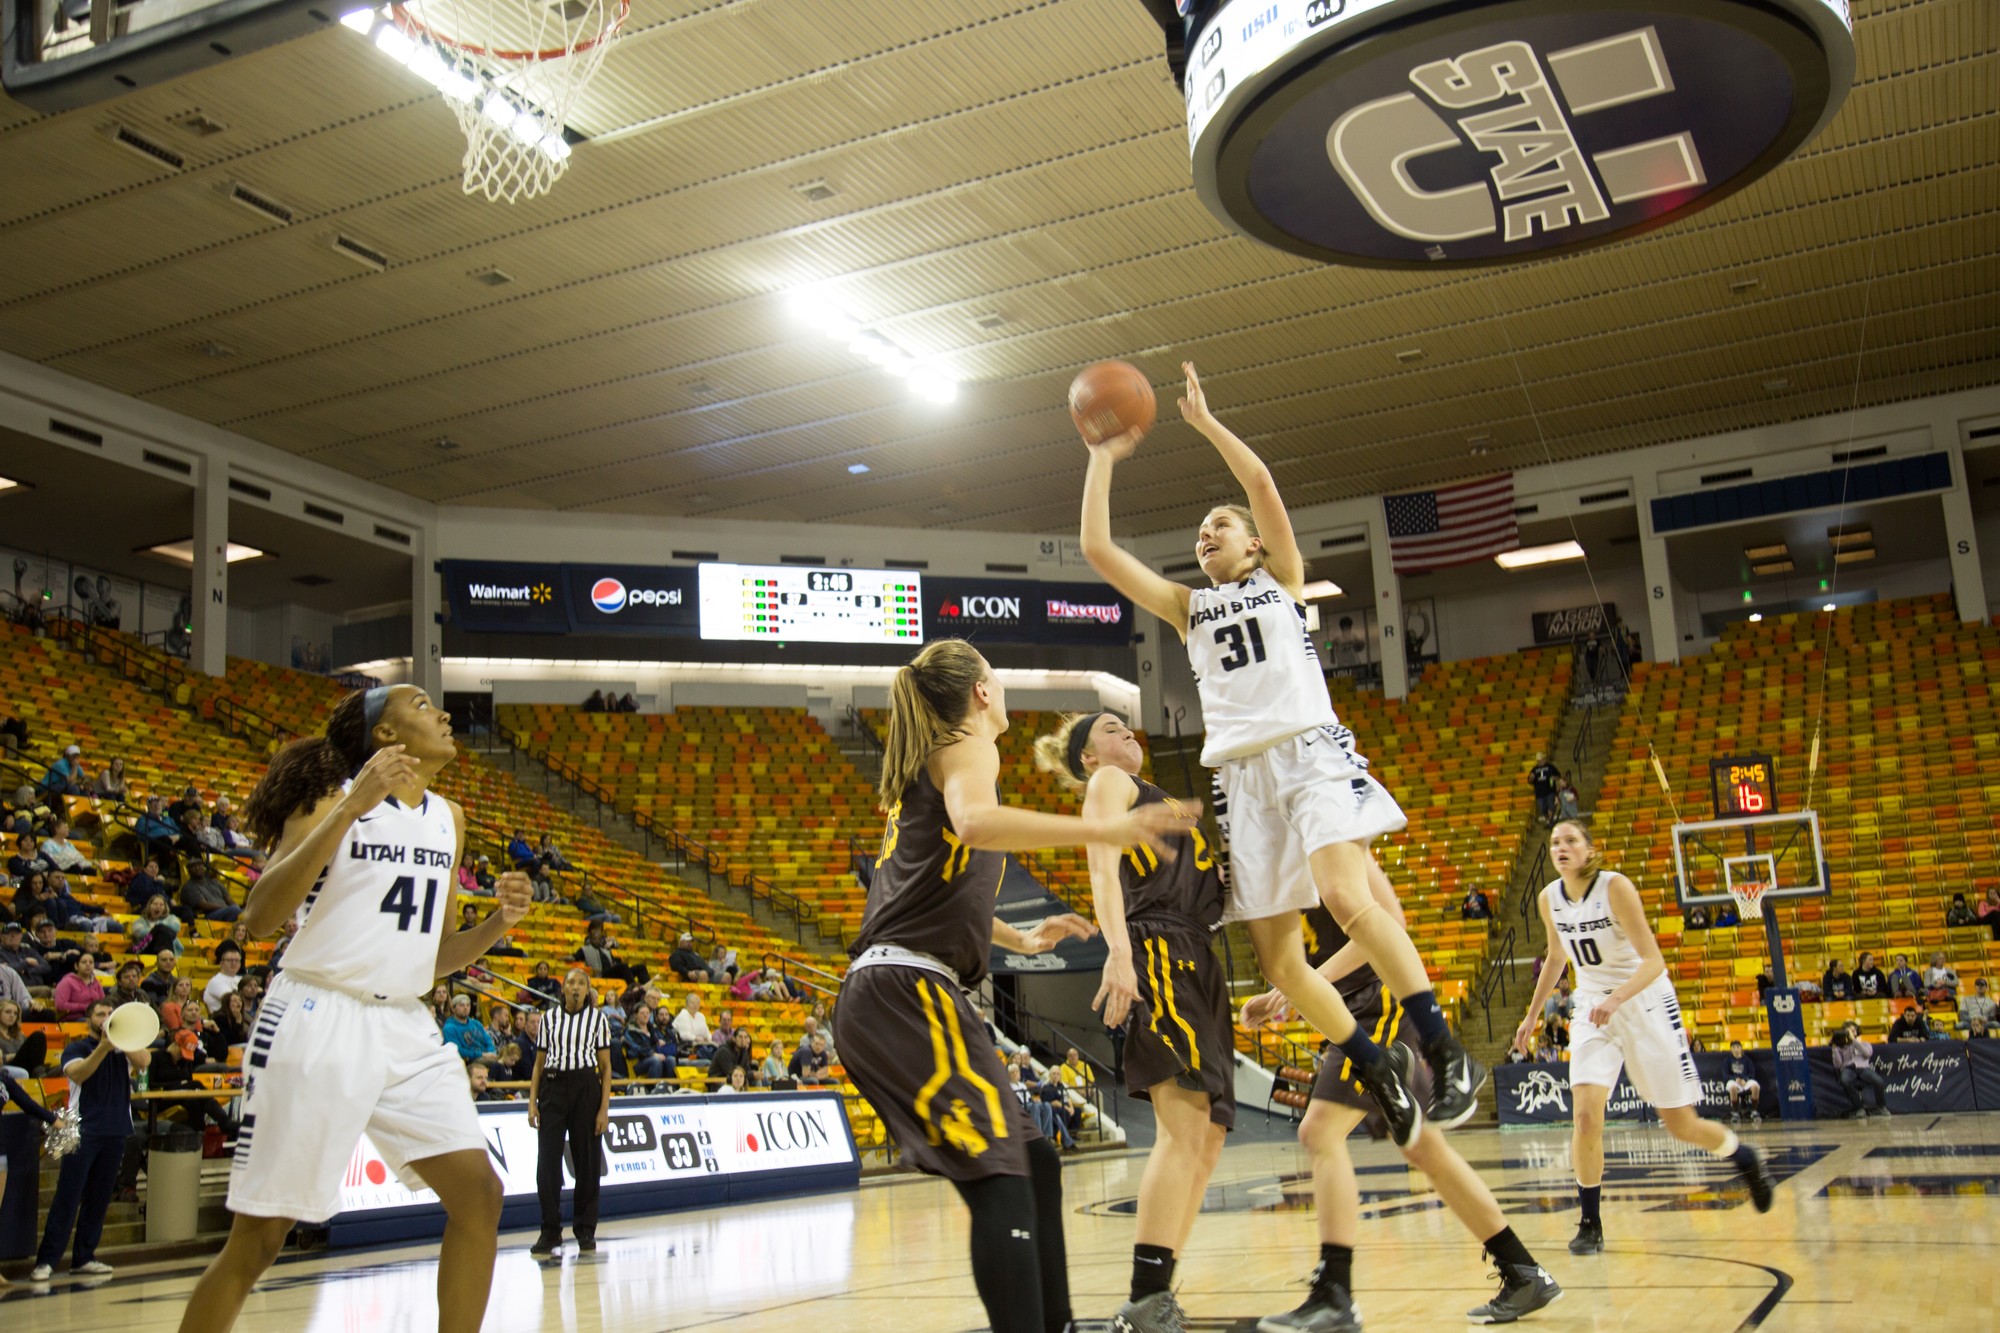 USU women's basketball improving with young core - The Utah Statesman